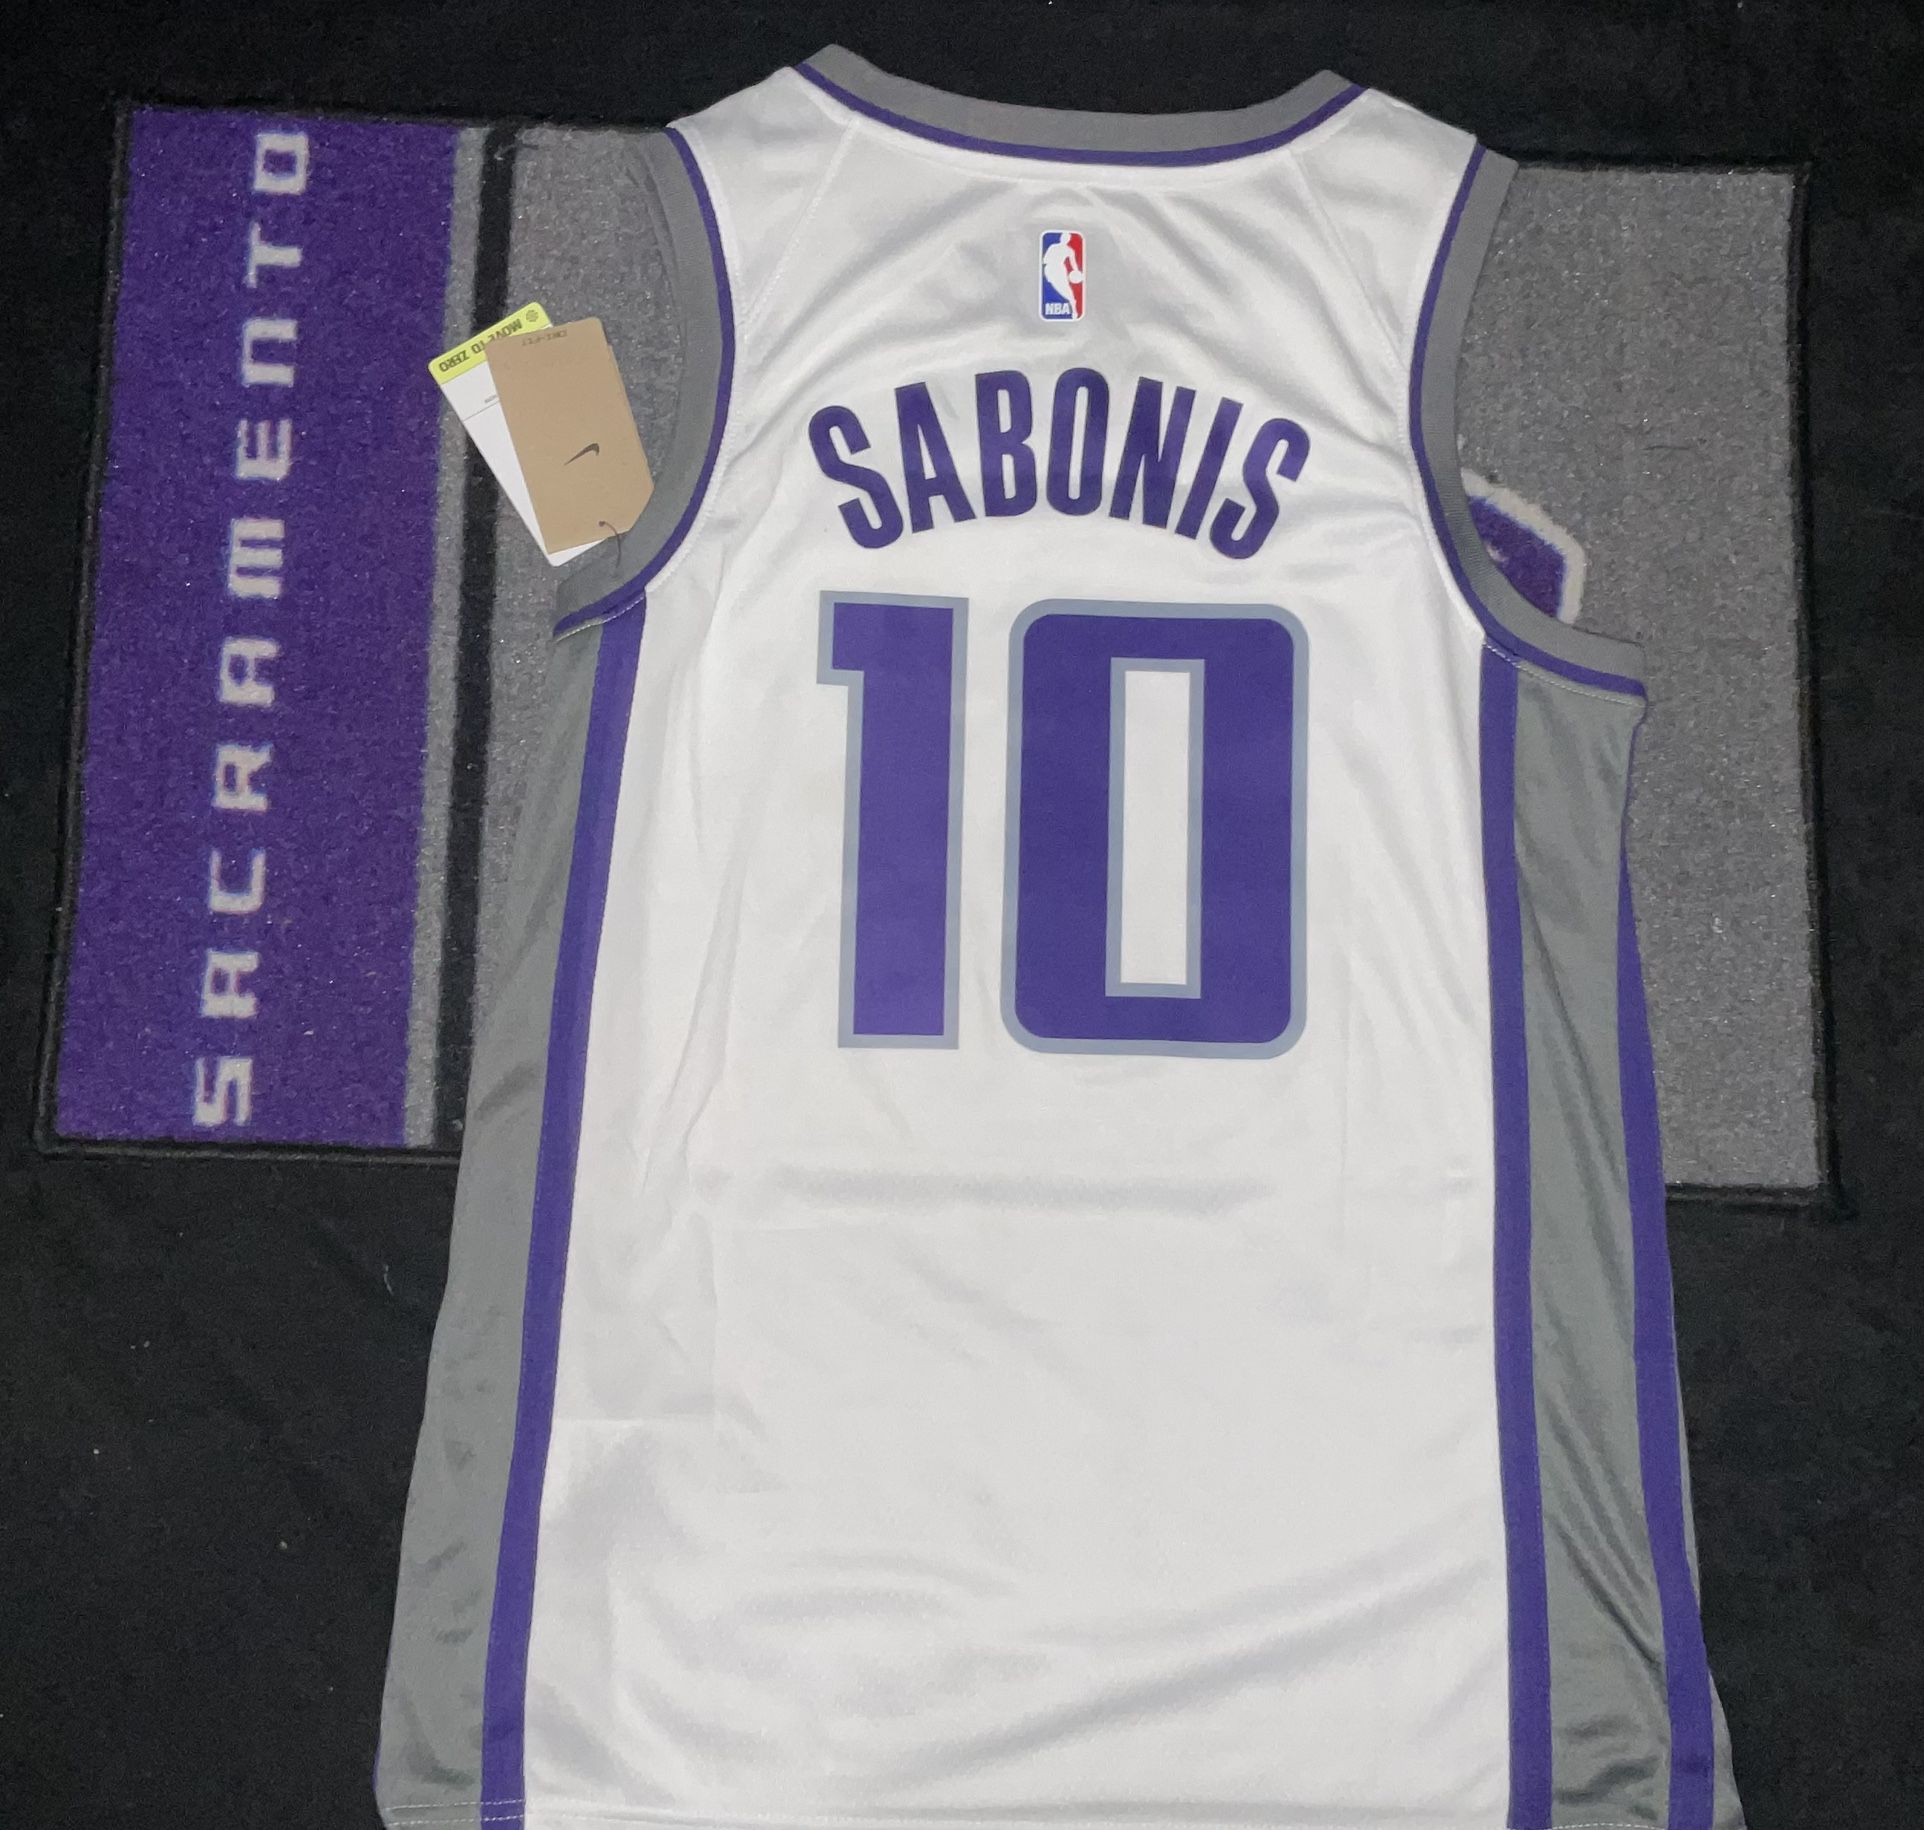 Sacramento Kings basketball jersey Stojakovic